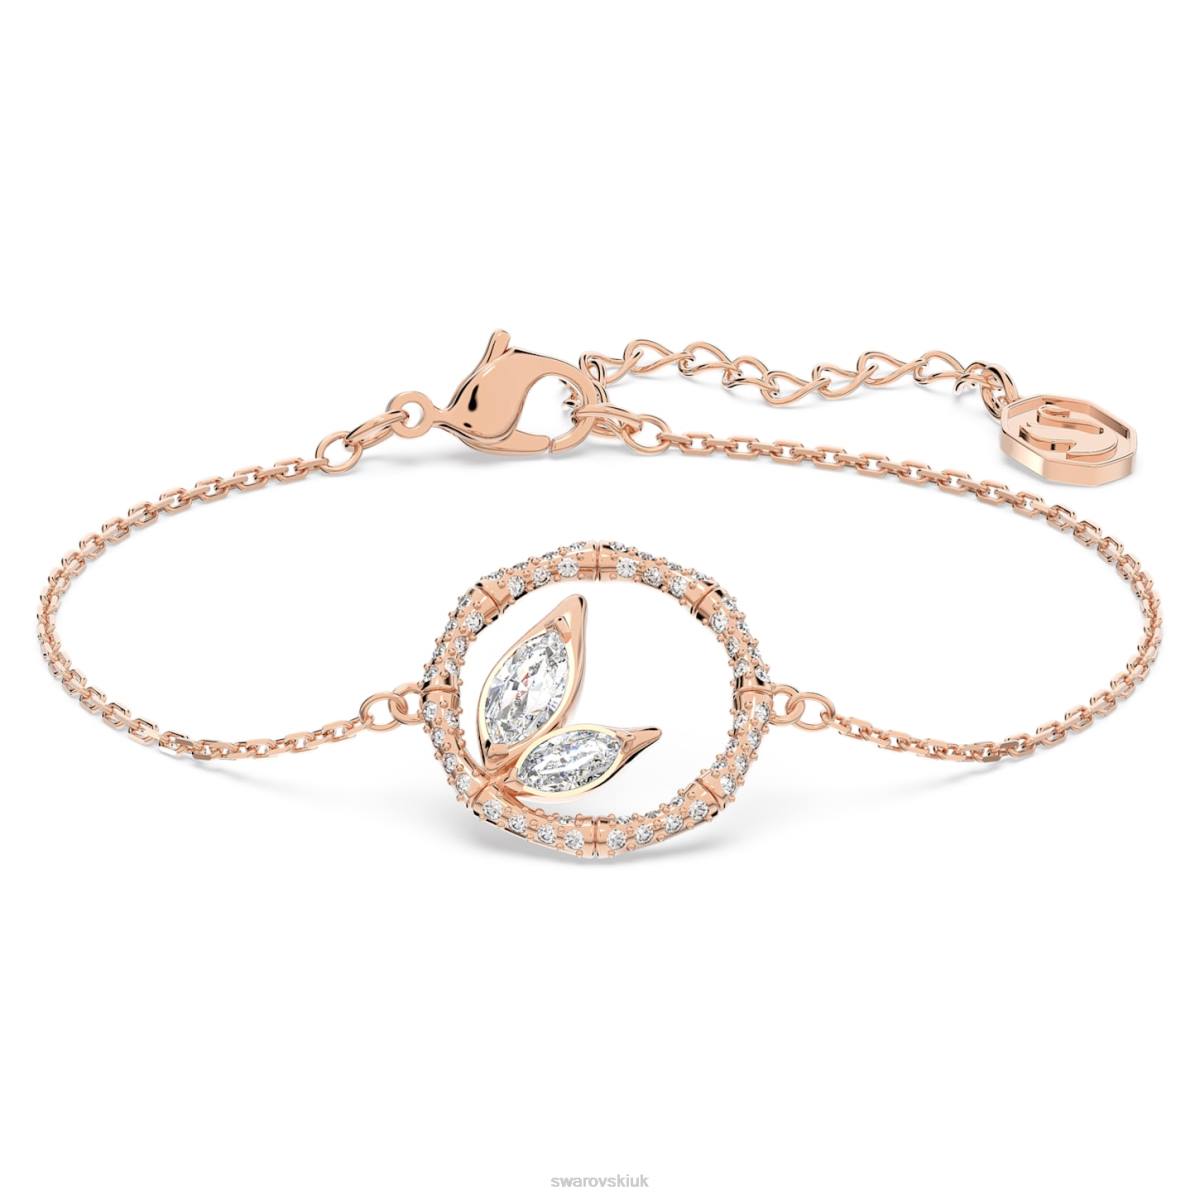 Jewelry Swarovski Dellium bracelet Bamboo, White, Rose gold-tone plated 48JX465